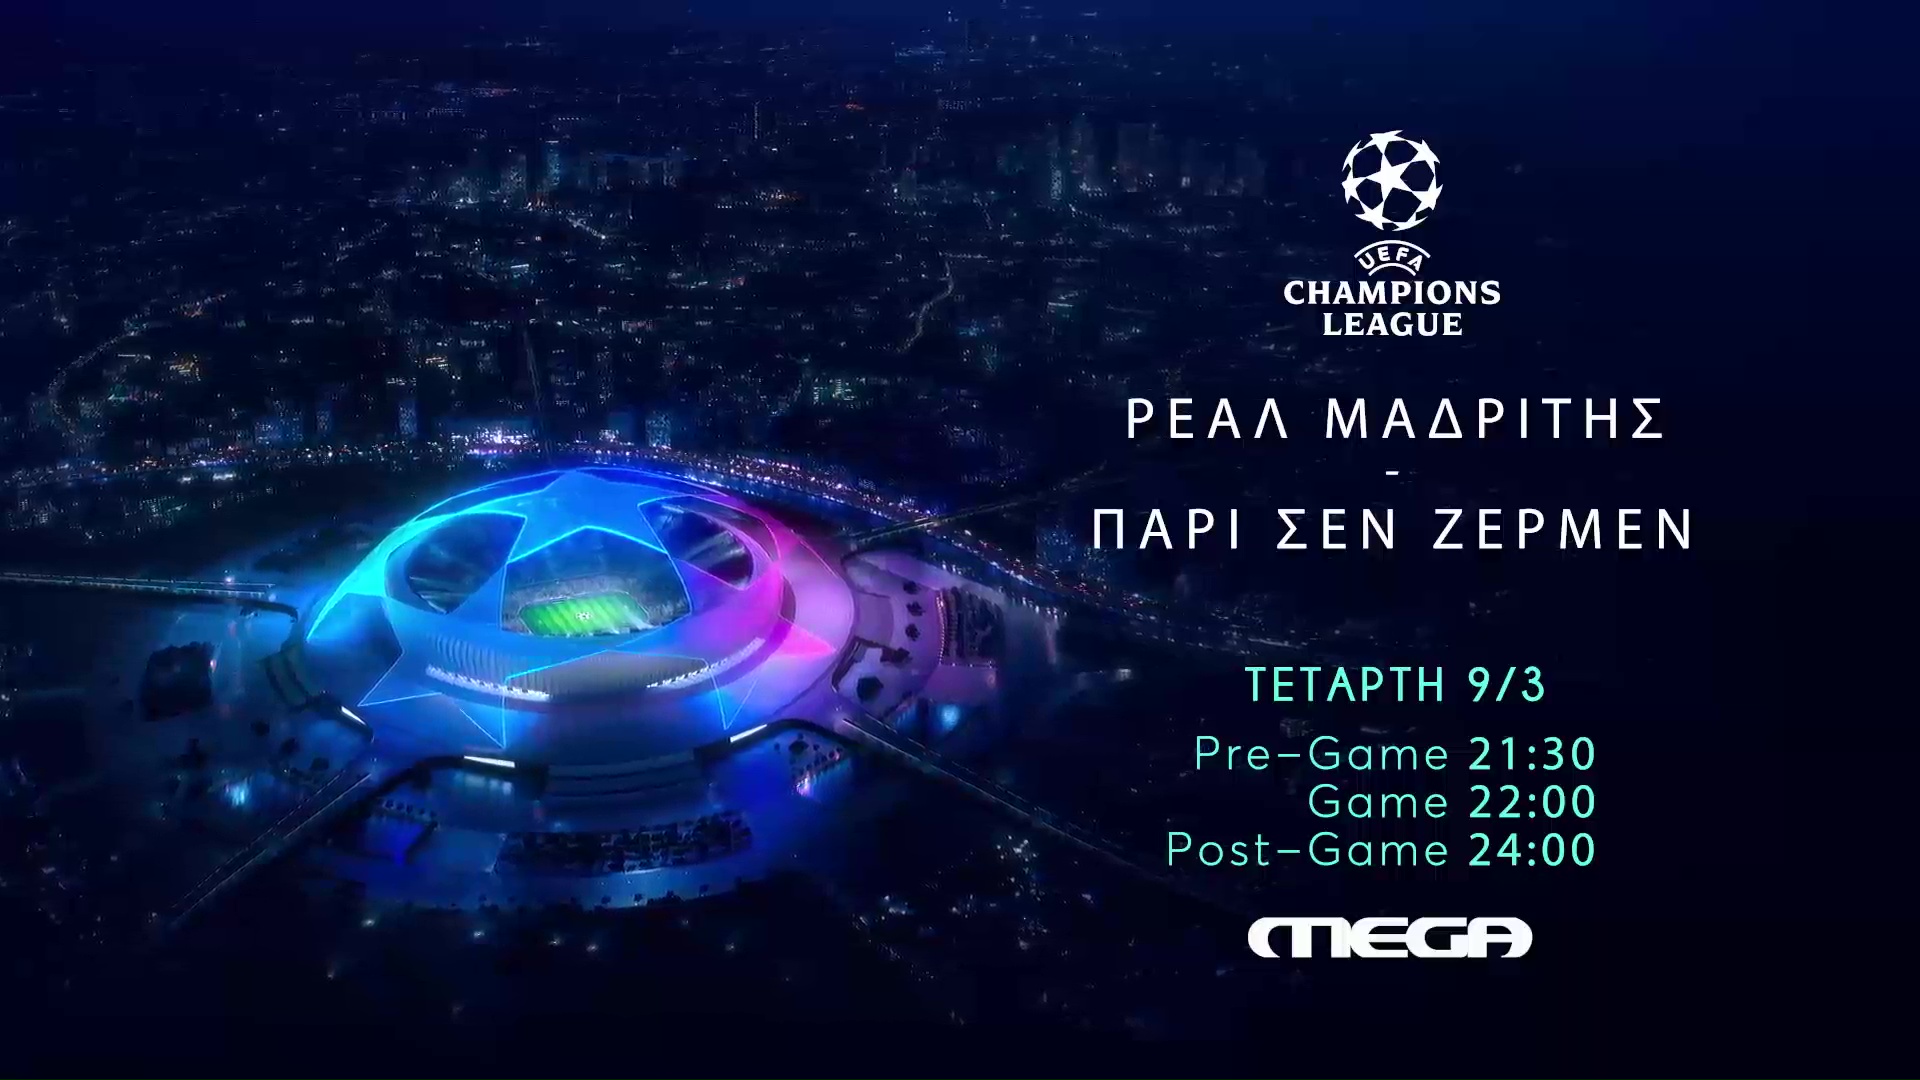 UEFA Champions League | Ρεάλ Μαδρίτης - Παρί Σεν Ζερμέν | Τετάρτη 9/3 22:00 (trailer)